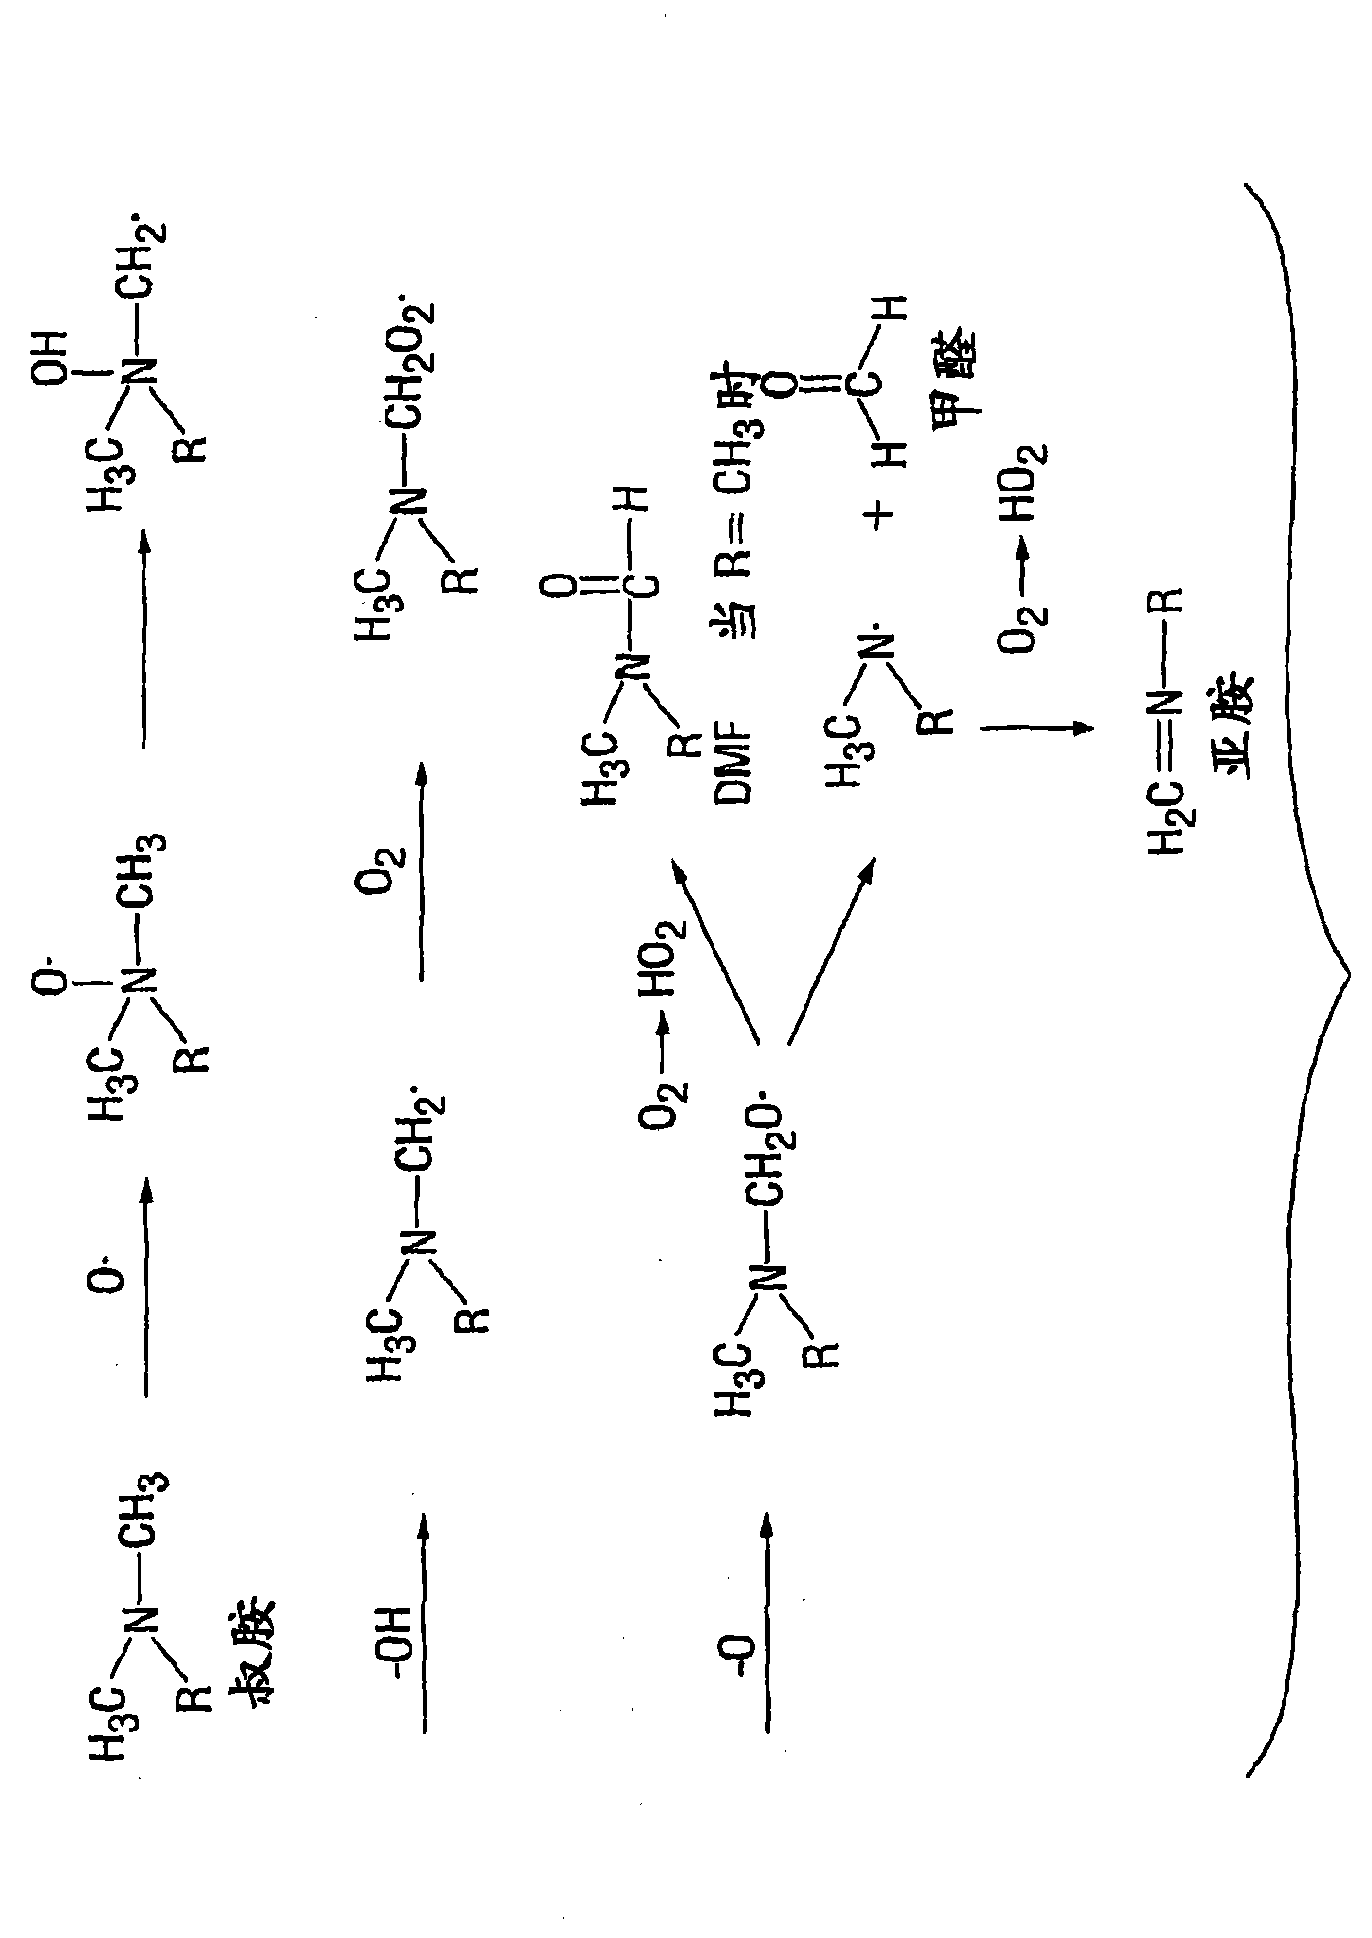 Inhibition of amine oxidation